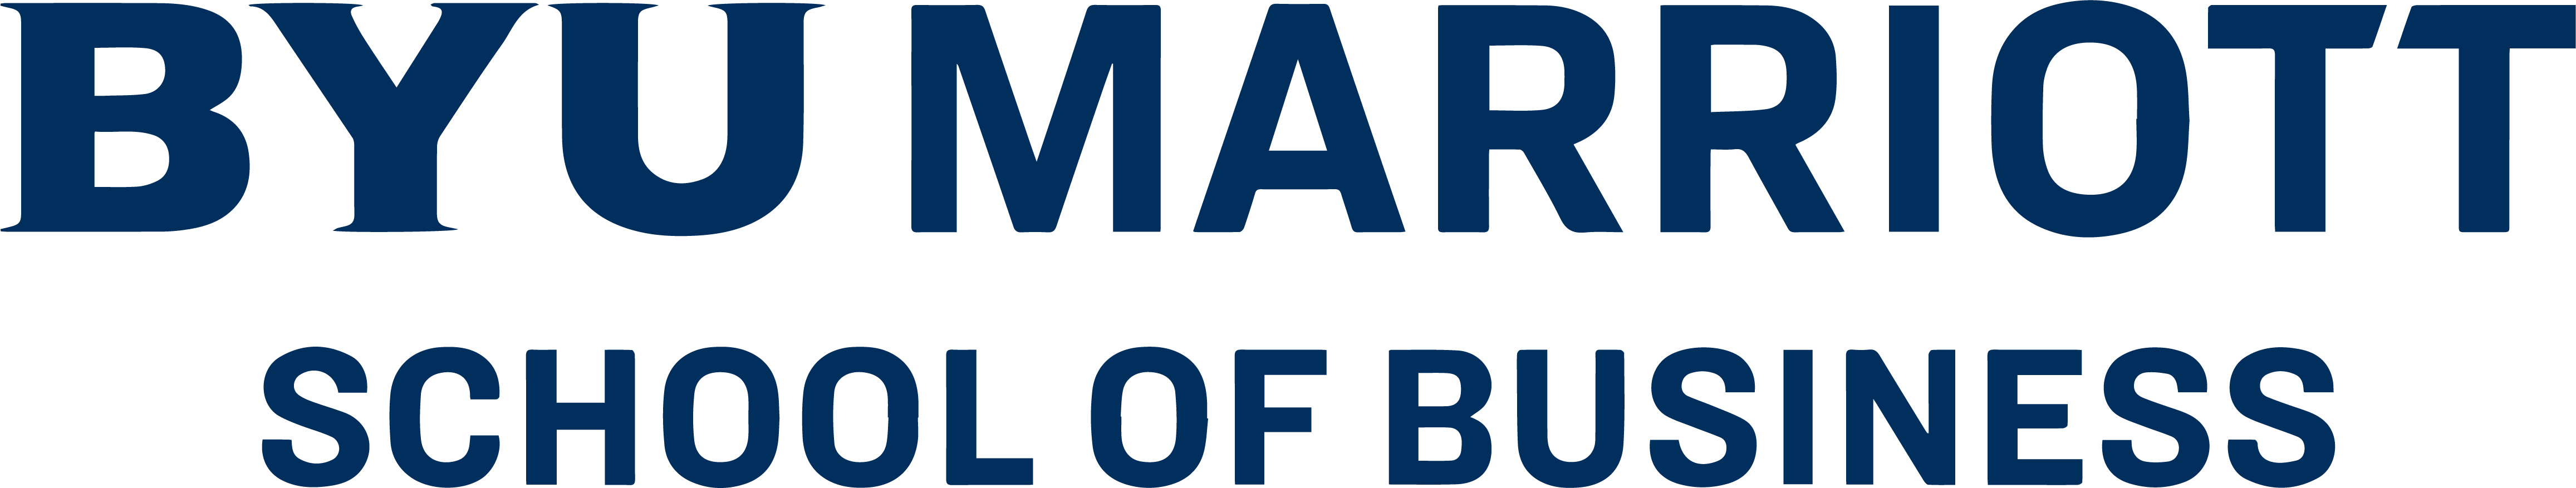 byu-marriott-logo